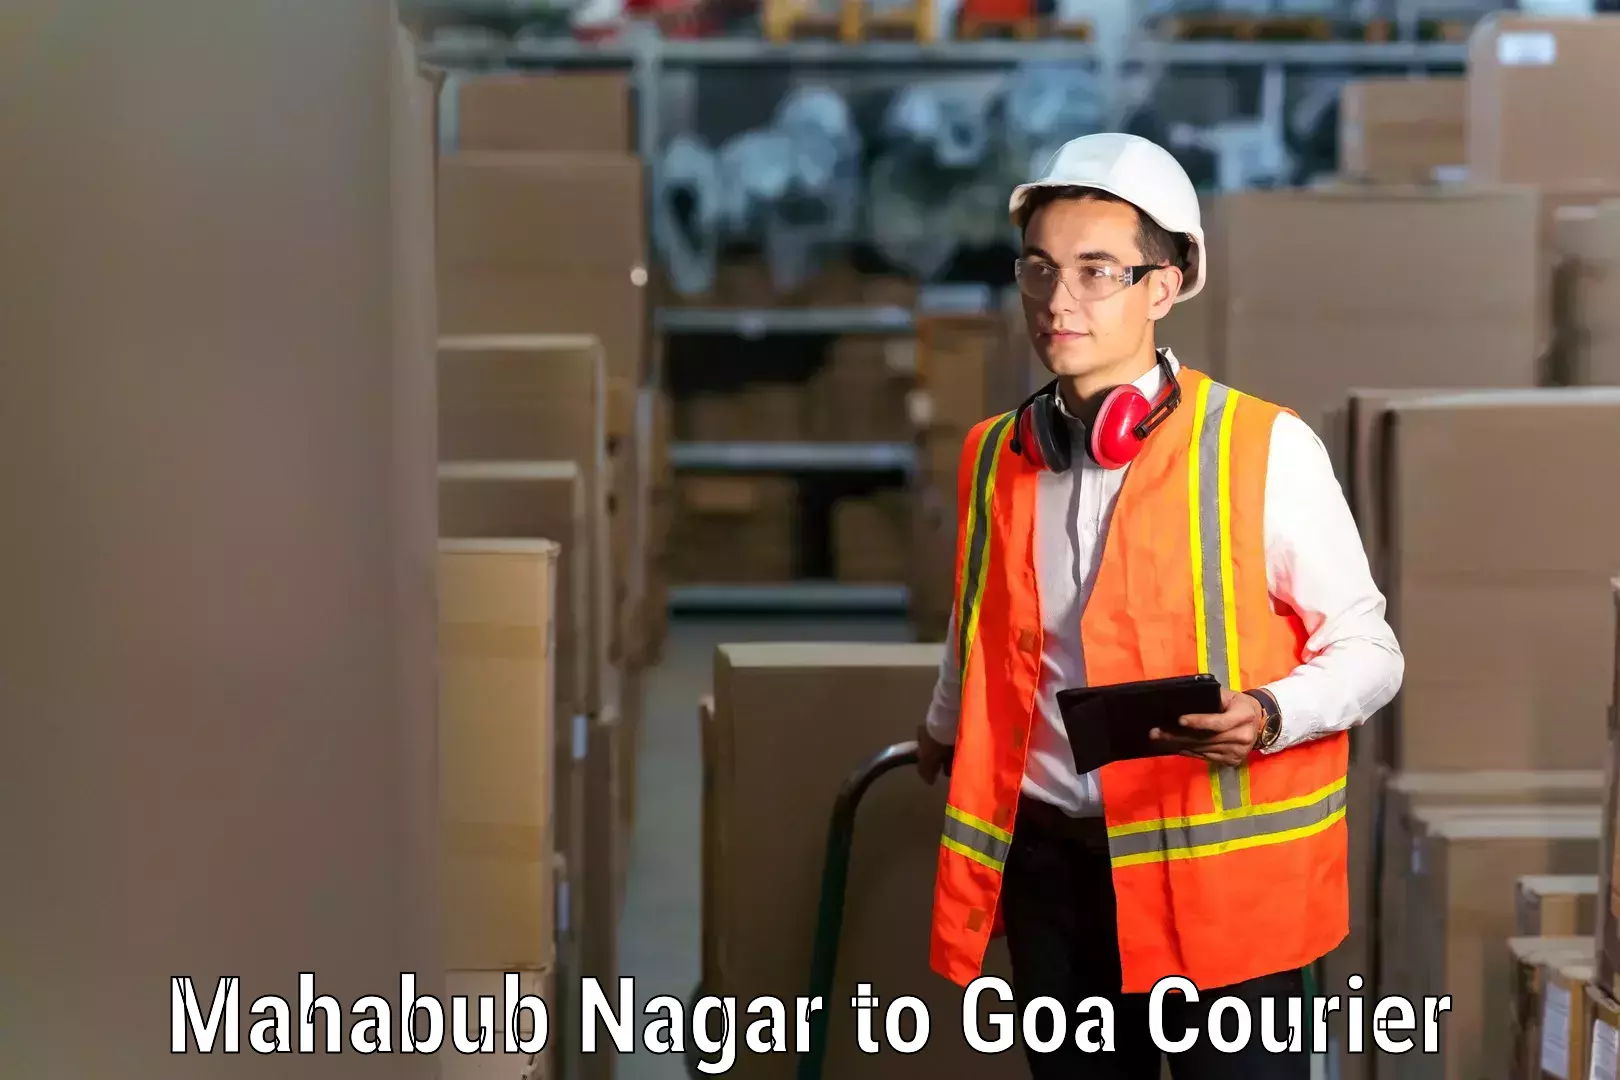 Expert moving and storage Mahabub Nagar to South Goa